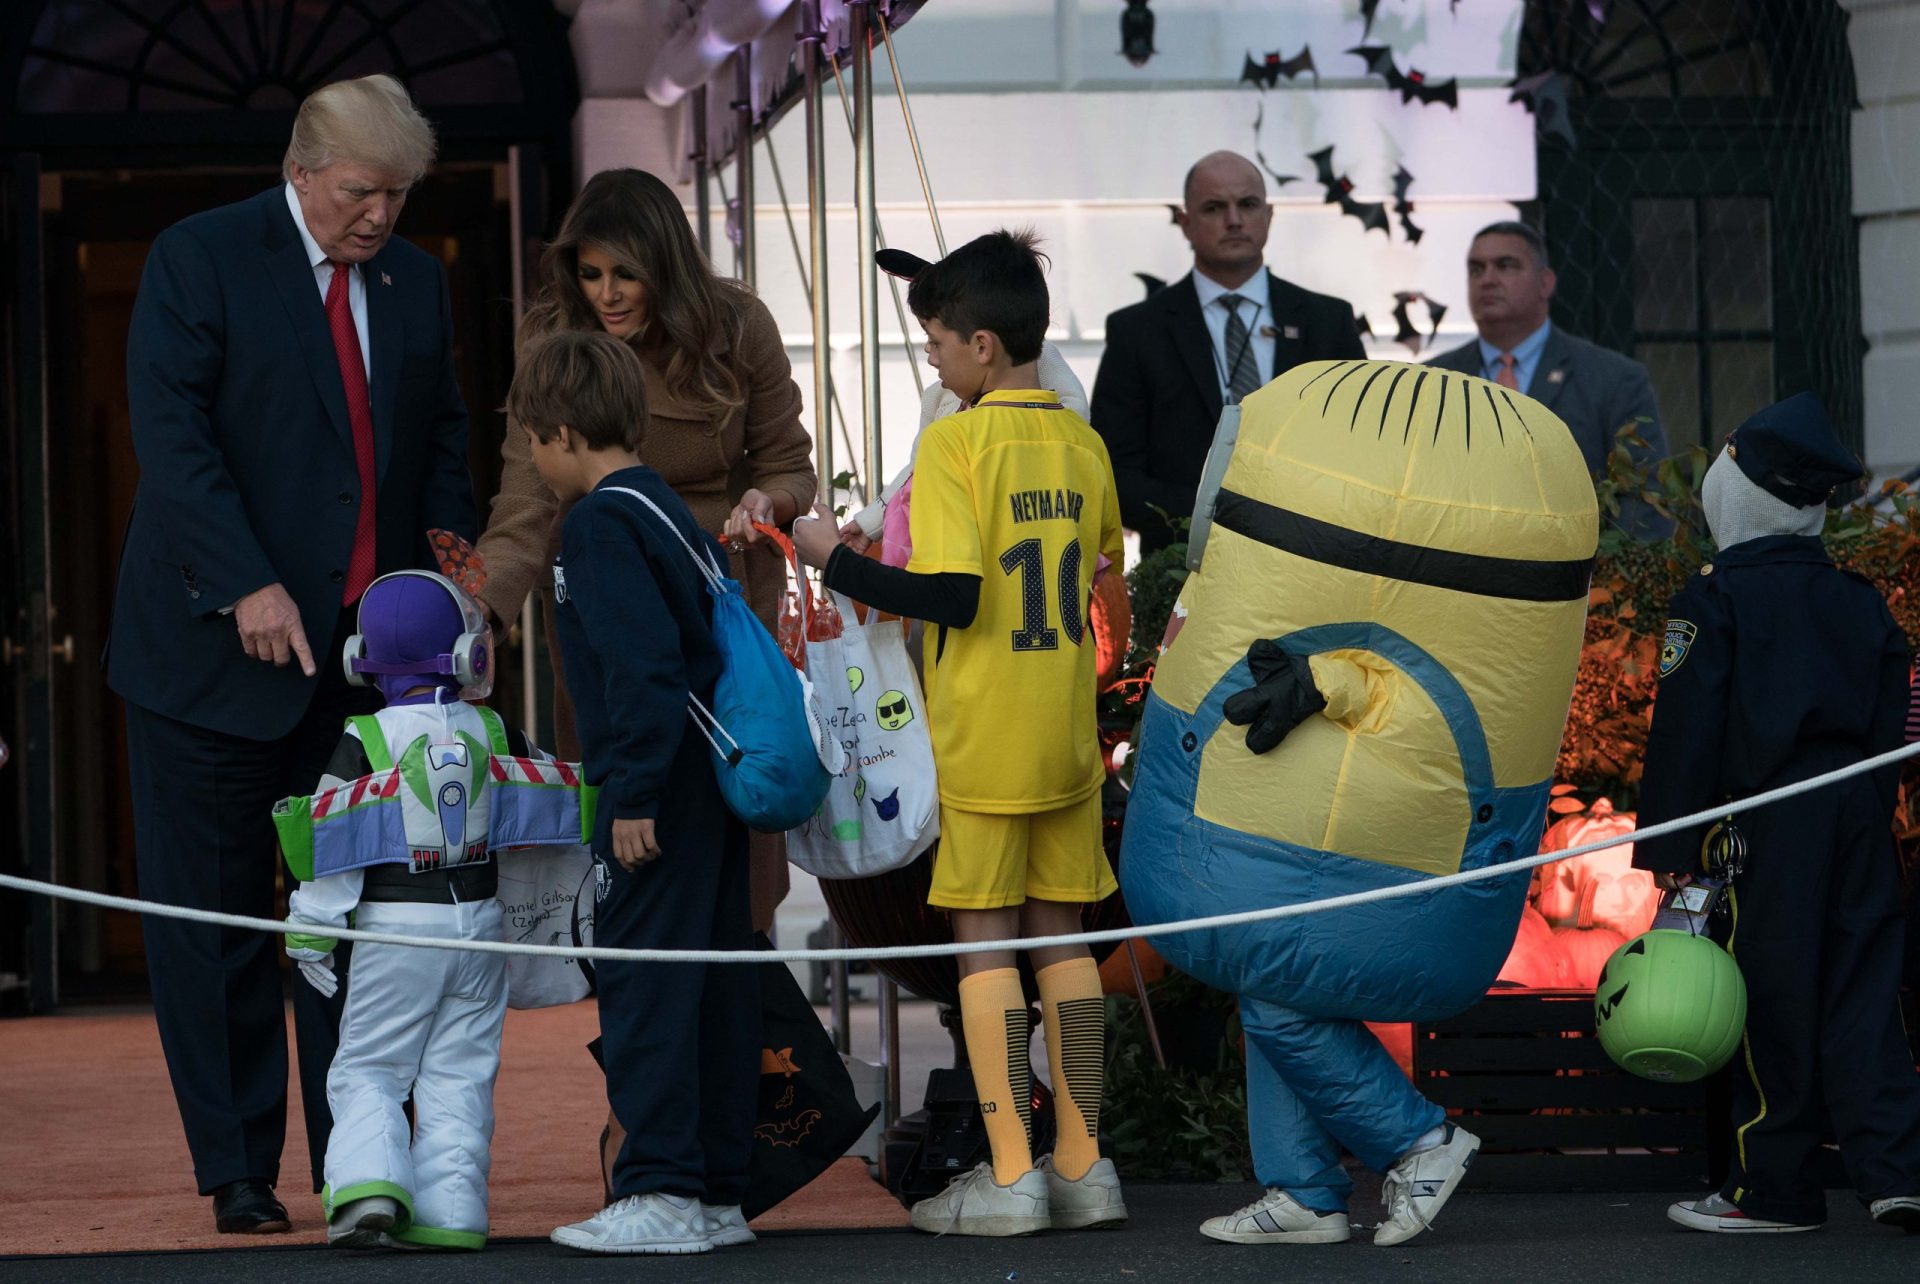 Trump festejou halloween na Casa Branca | FOTOGALERIA